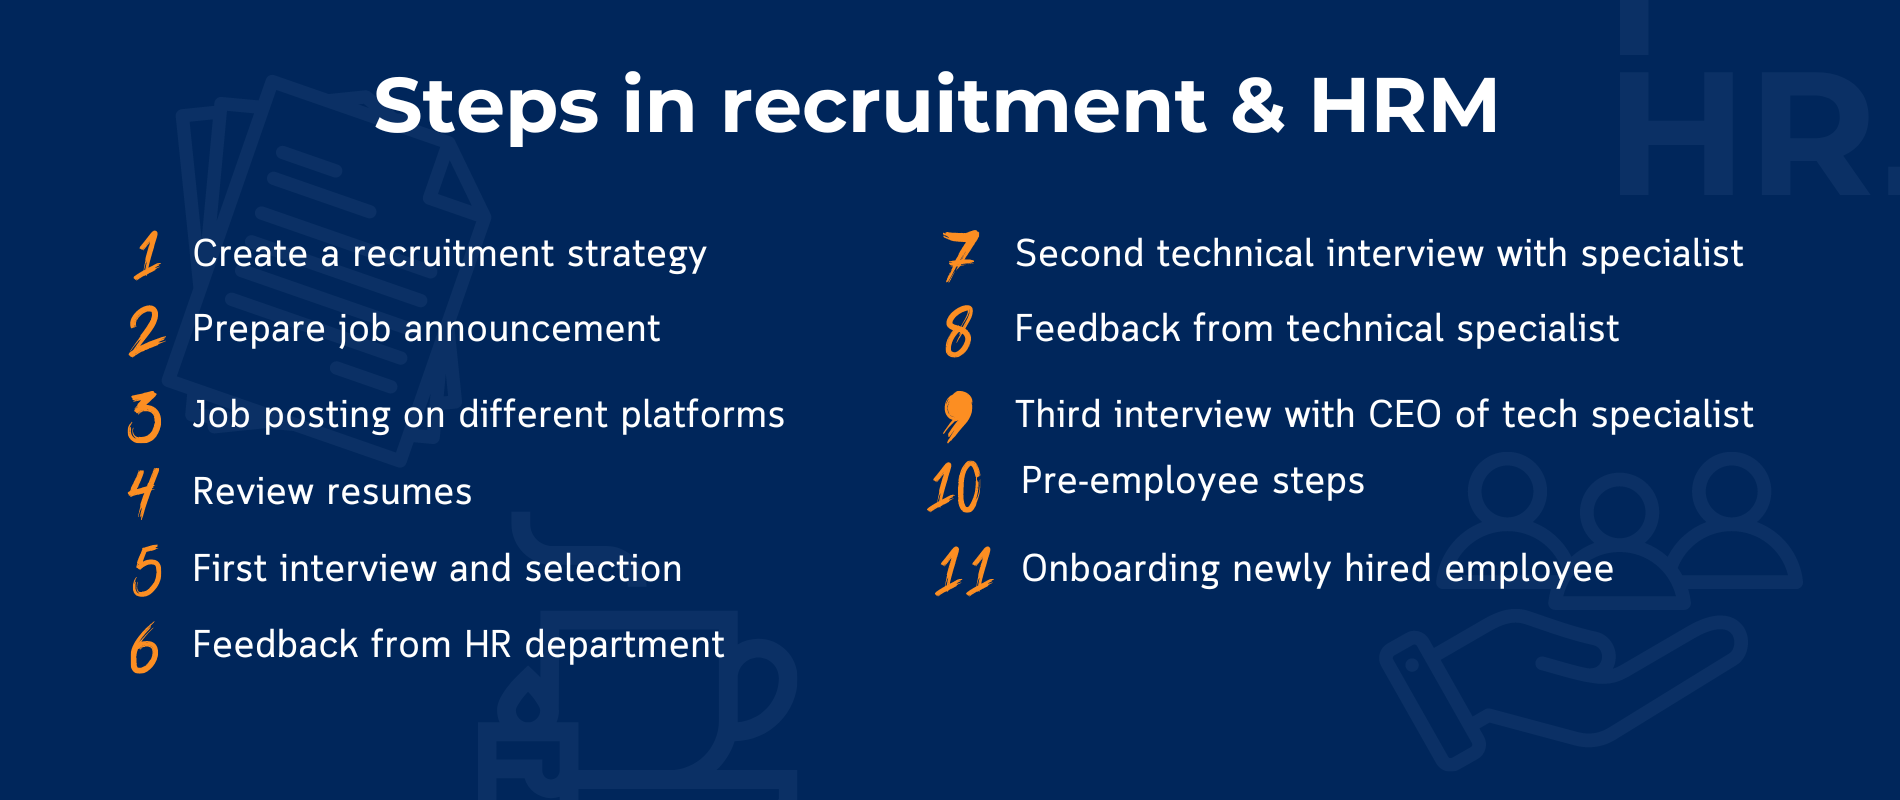 Recruitment steps in IT